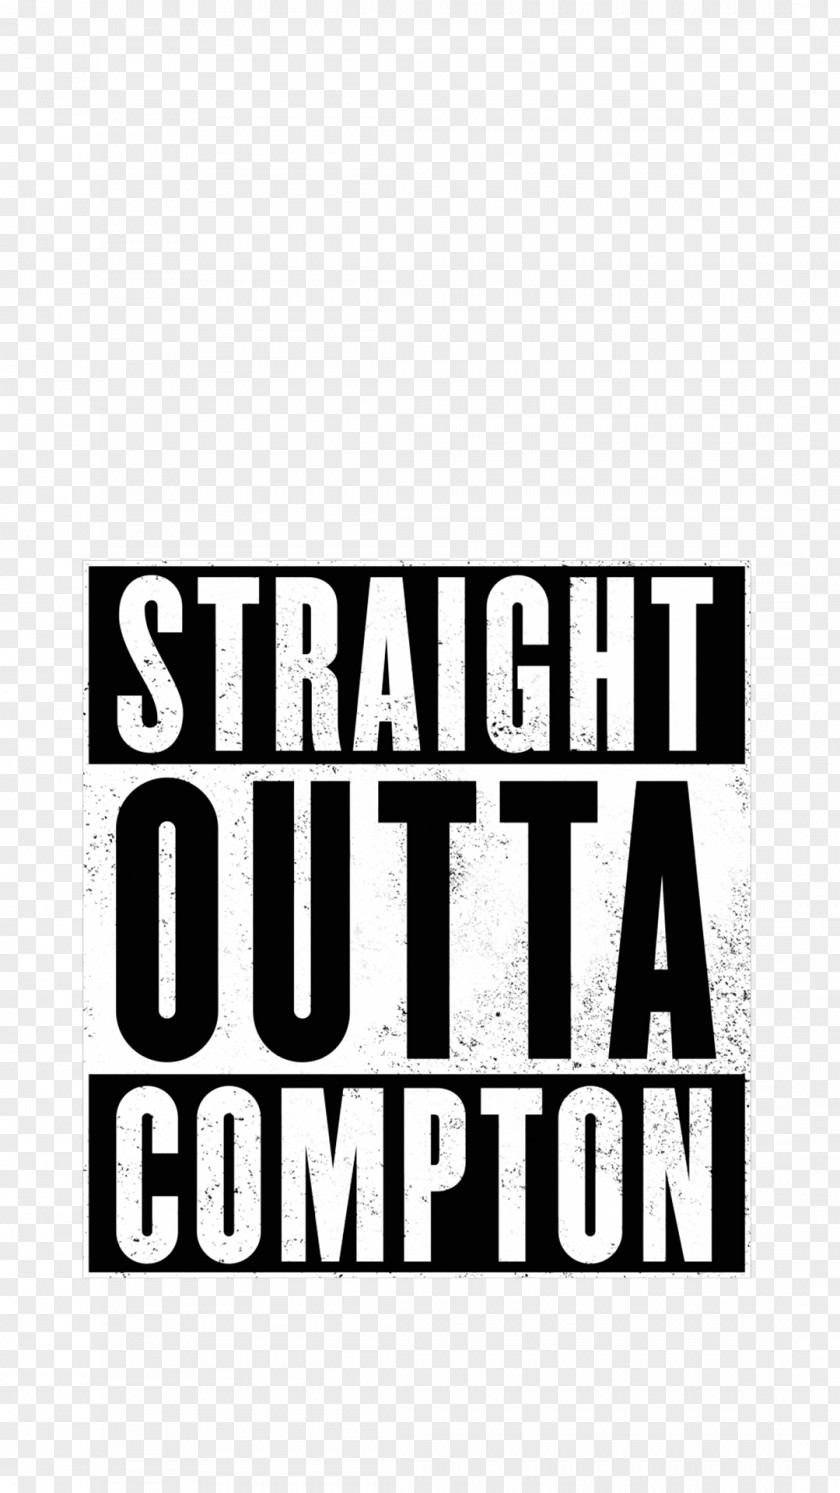 Straight Outta Compton N.W.A. Gangsta Rap Hip Hop PNG